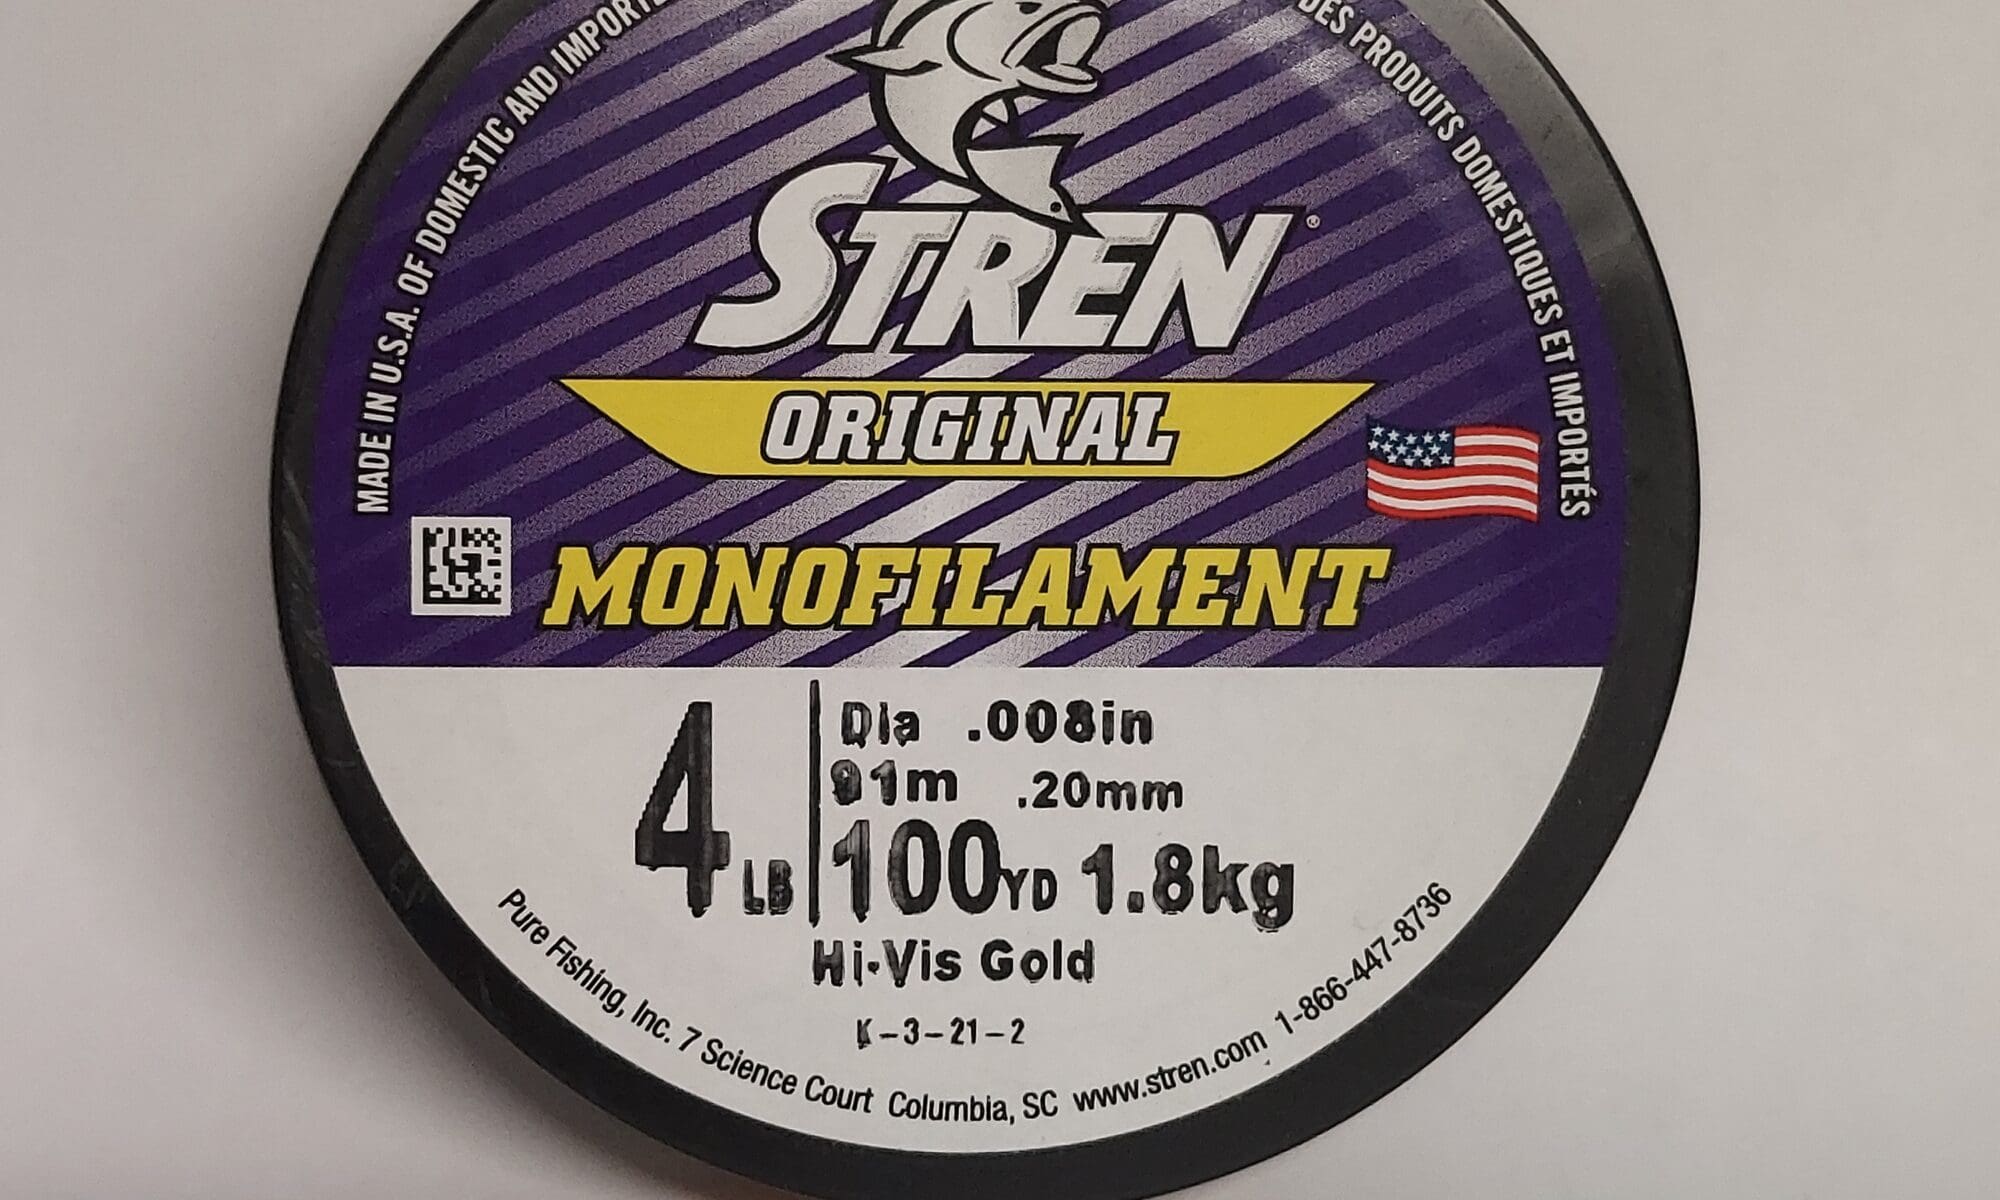 Stren Original Monofilament Fishing Line, HI-VIS Gold 100 YDS 4 lb